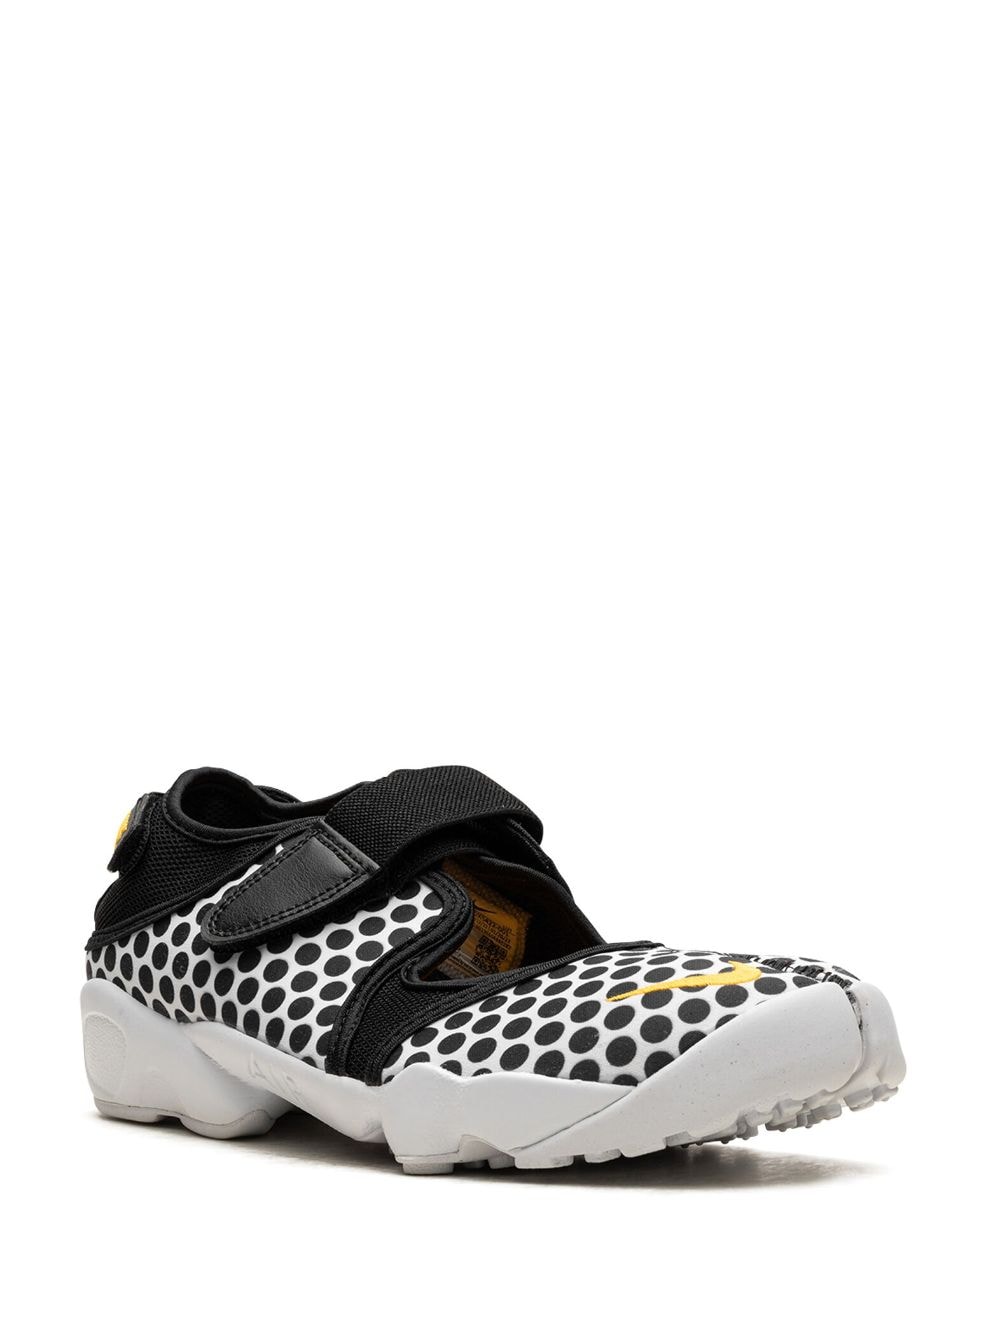 Shop Nike Air Rift "black/white" Sneakers